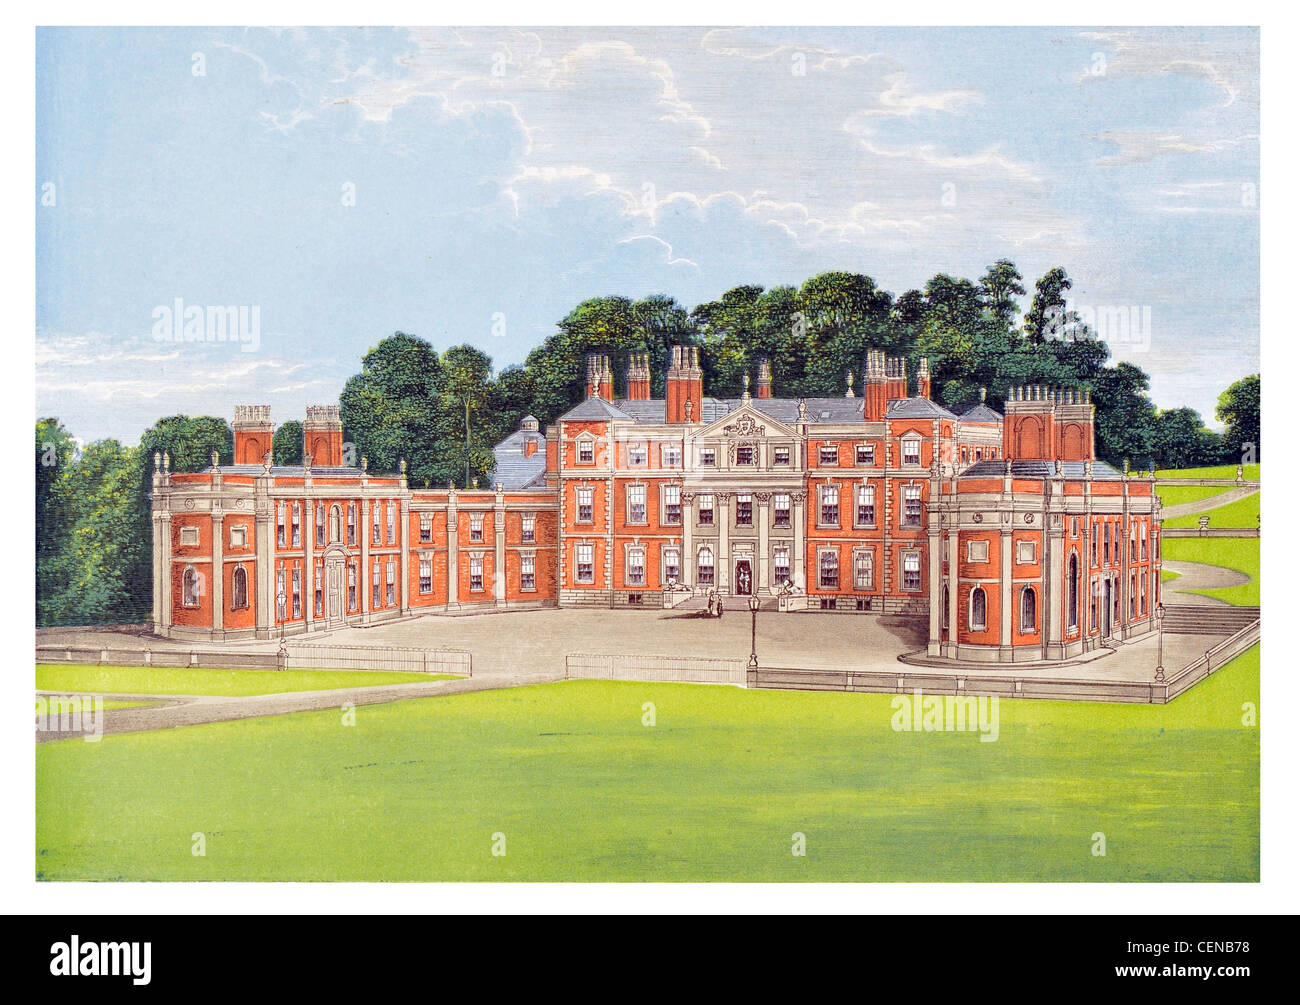 Hawkstone Hall 18th century country mansion Hodnet Shropshire England UK Grade I listed building Stock Photo